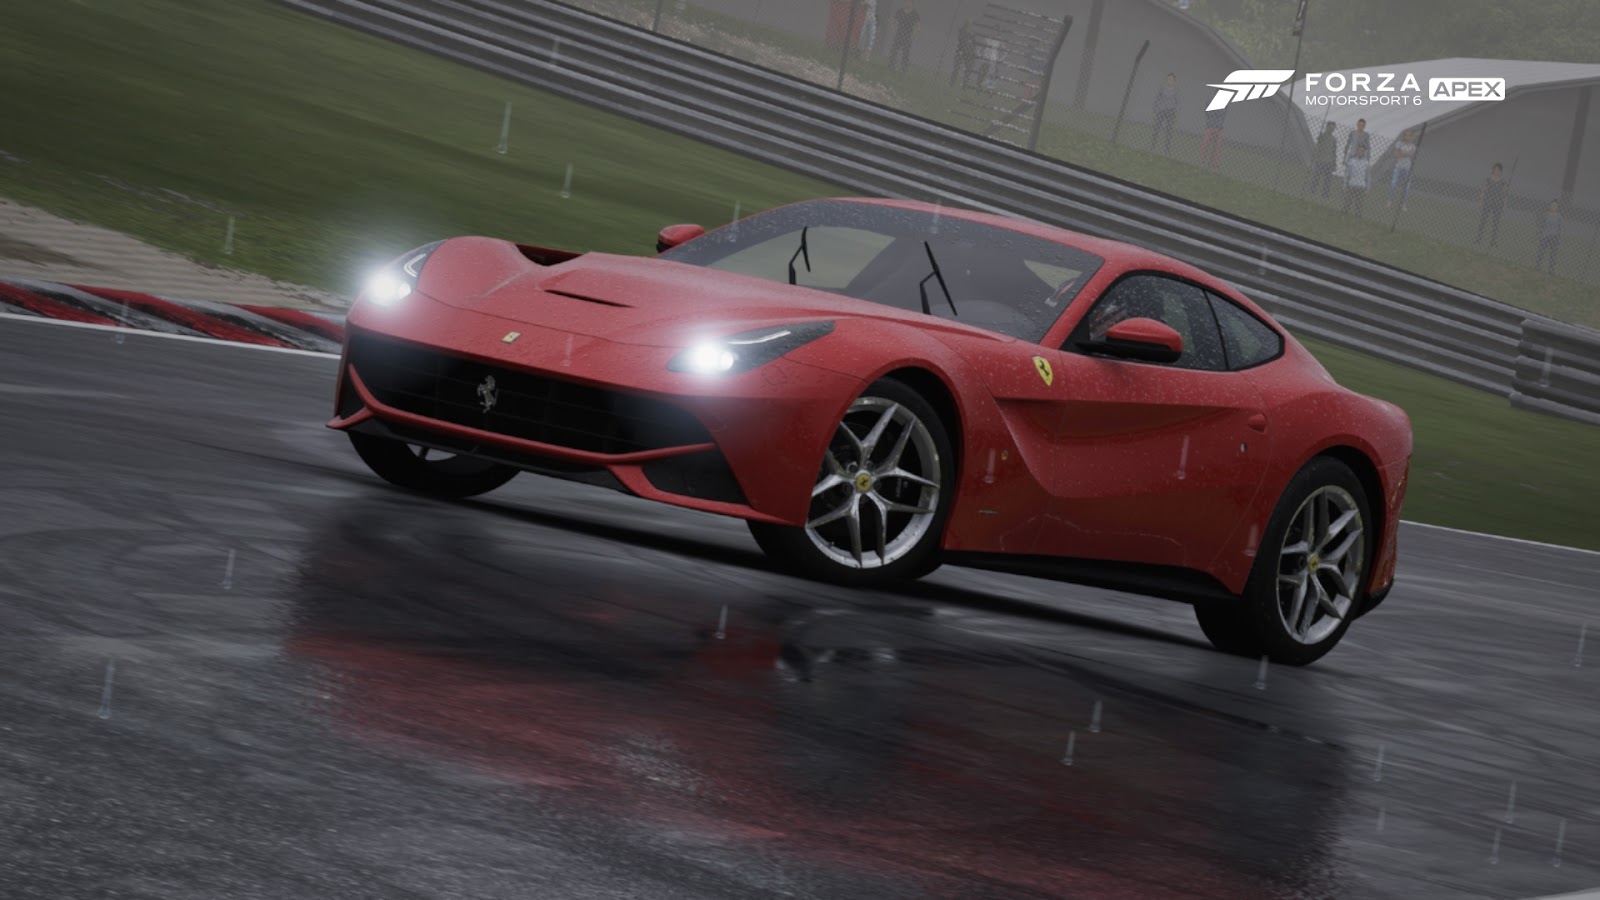 Forza motorsport 7 системные